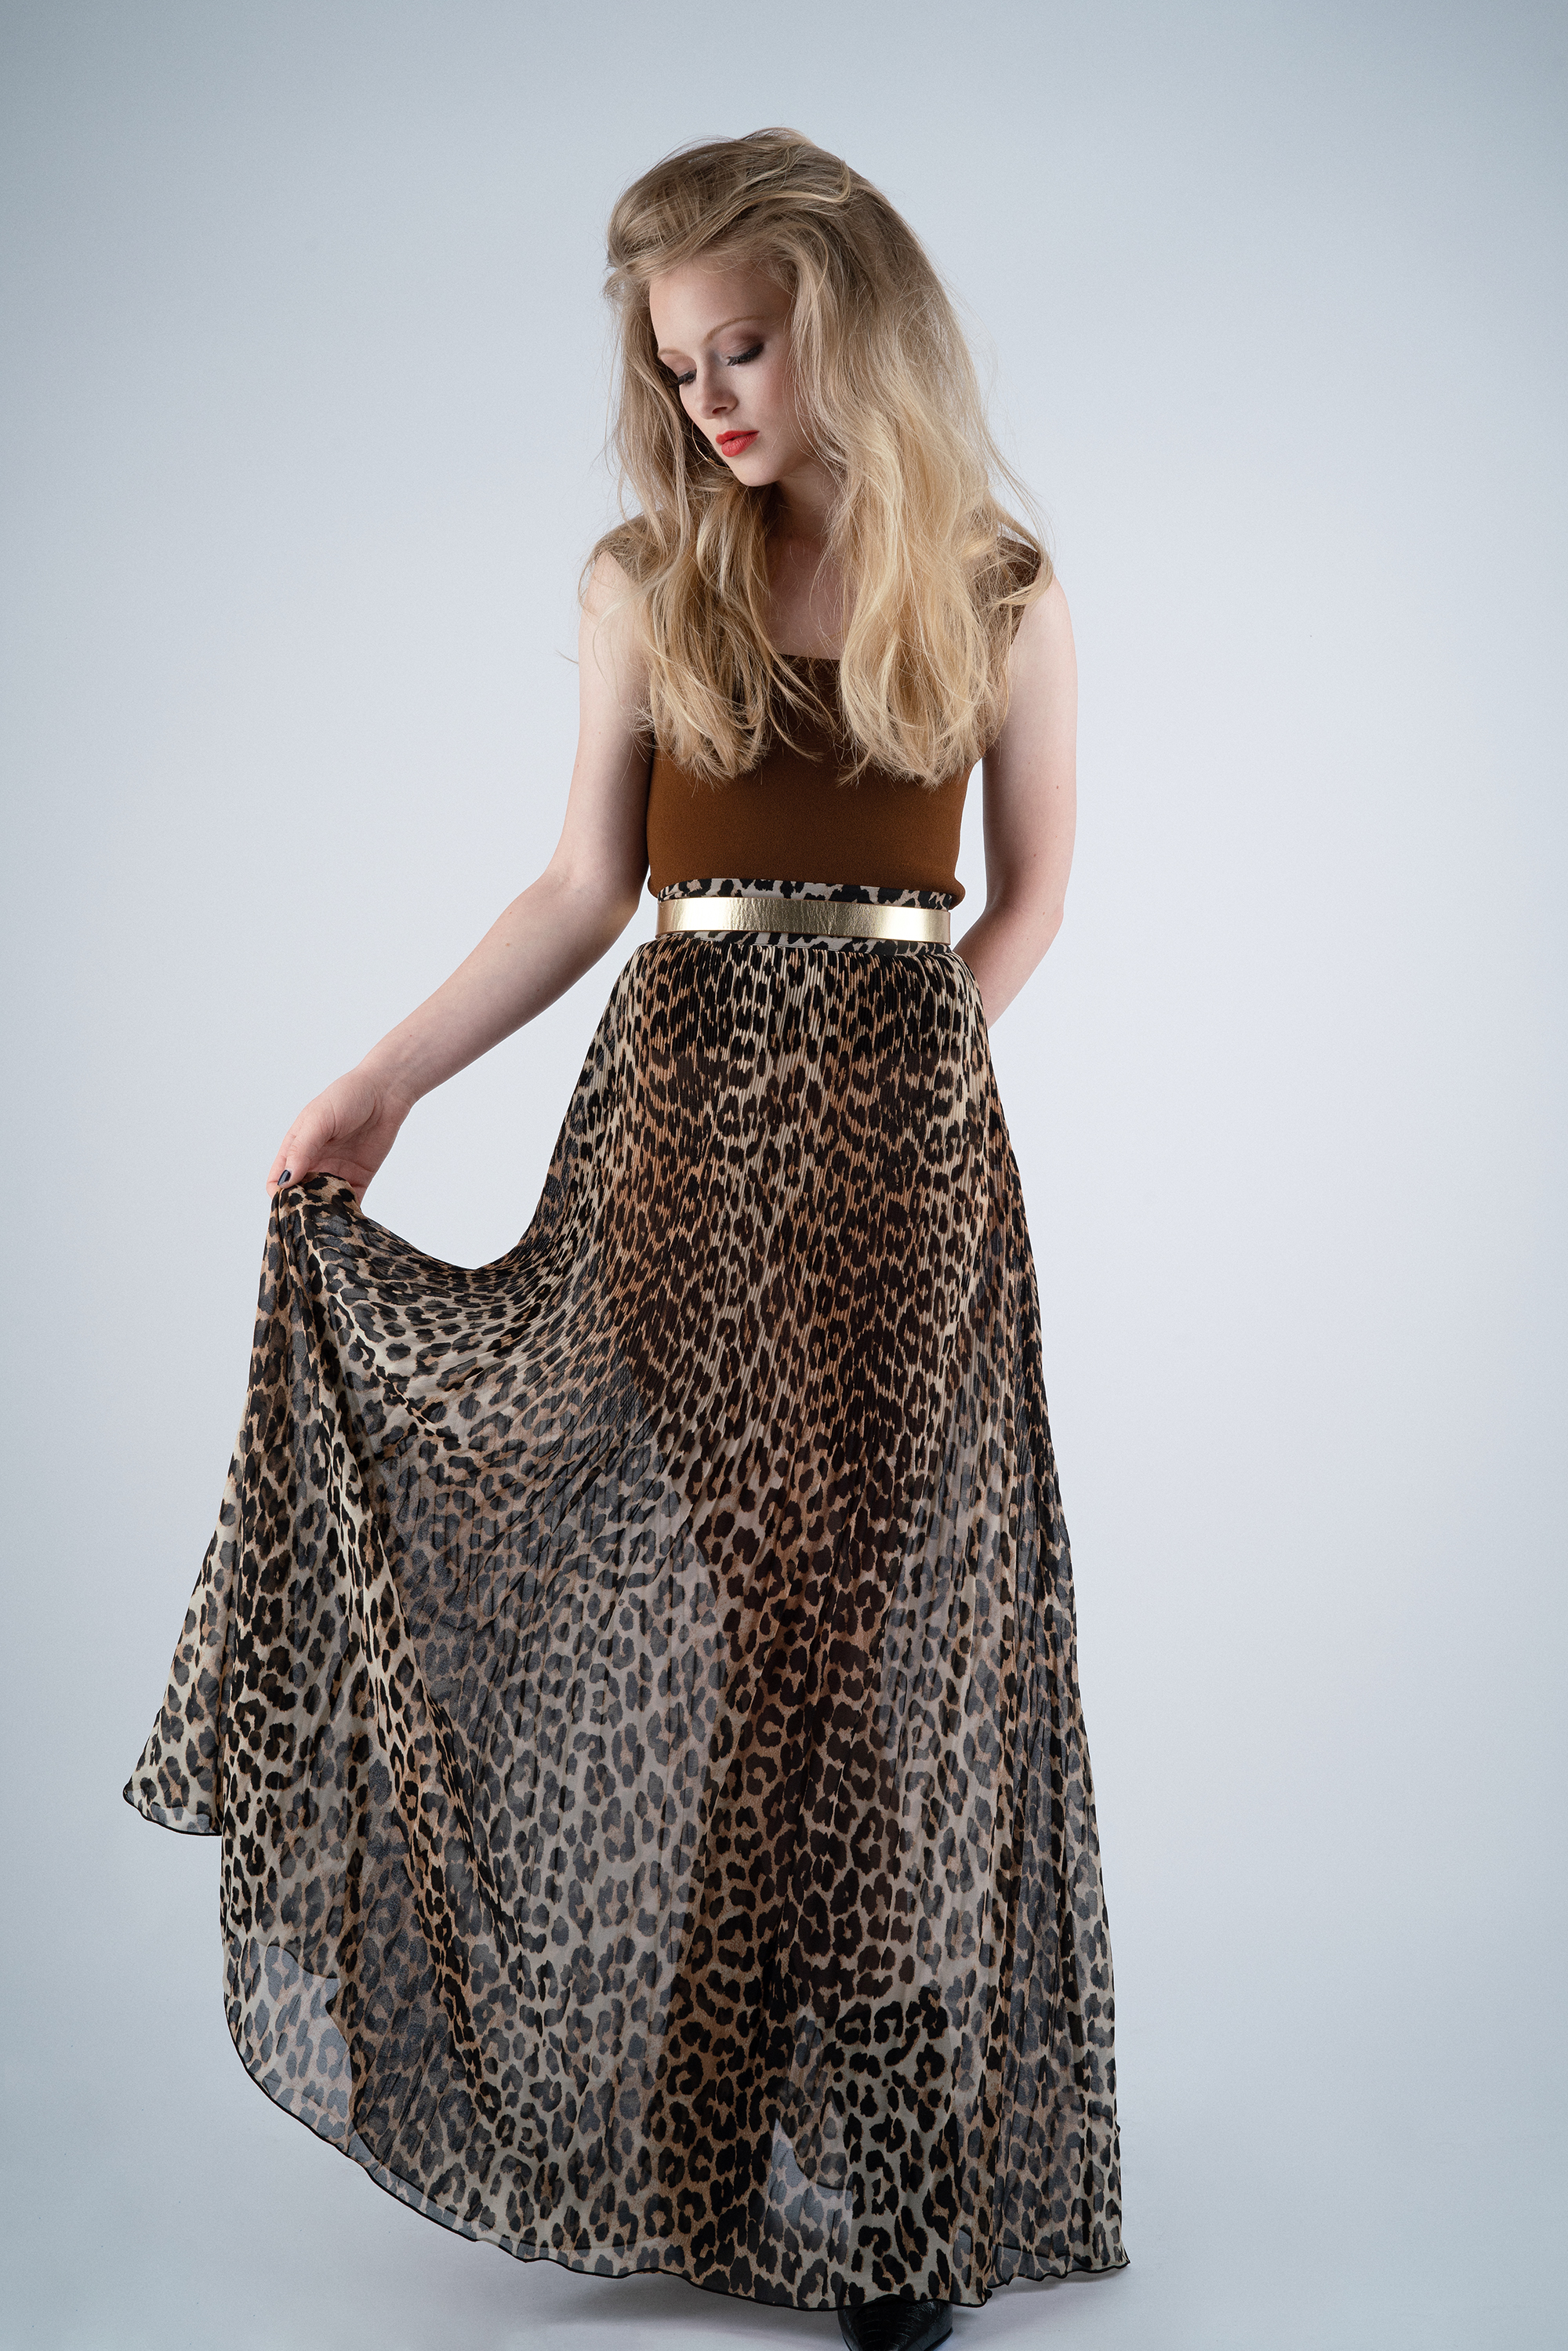 Gossard Animal Instinct Leopard Print Shorts Knickers BNWT 11344 –  Worsley_wear